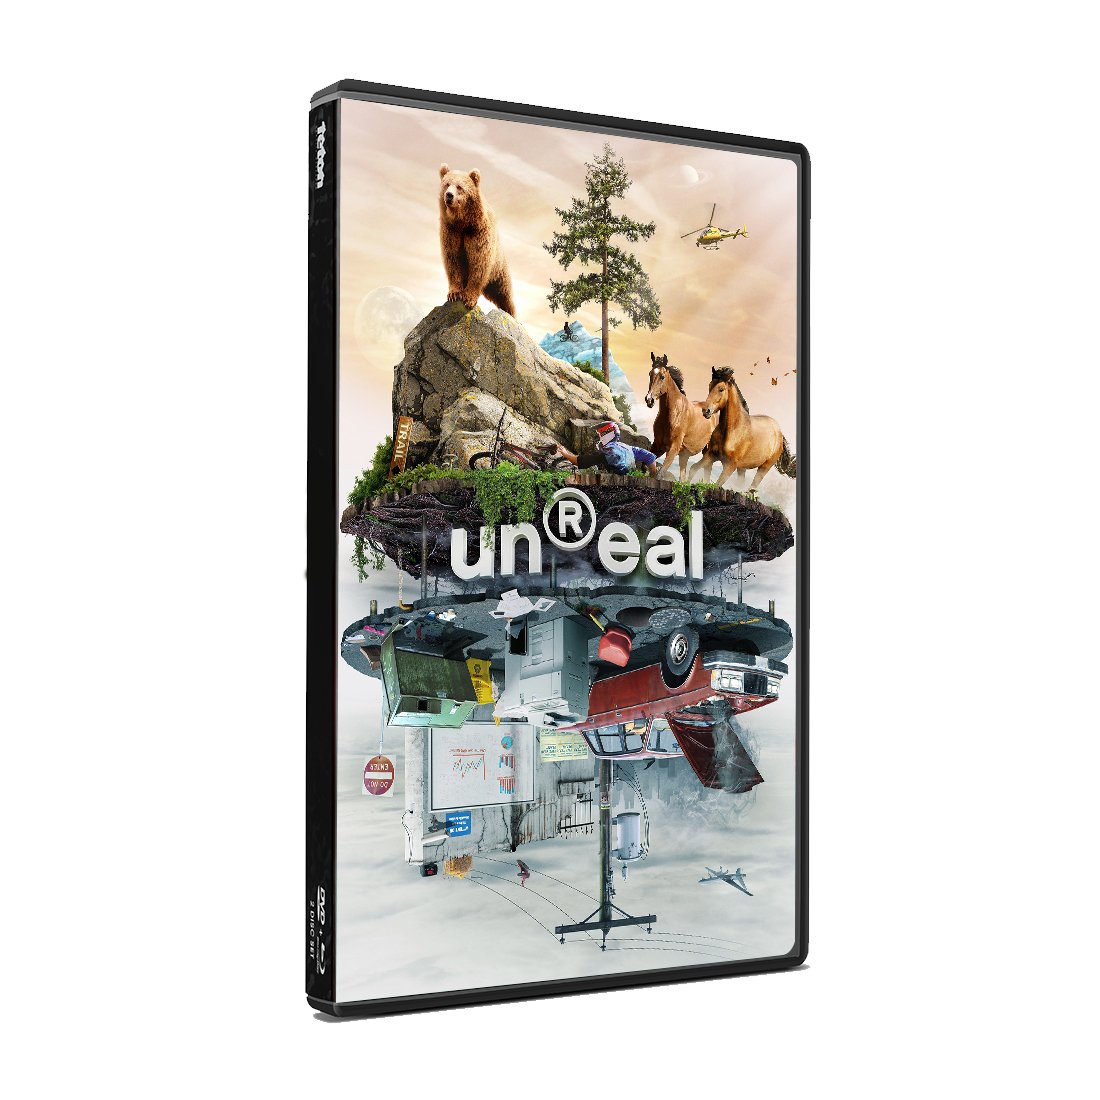 unReal DVD/Blu-Ray Combo Pack - Teton Gravity Research